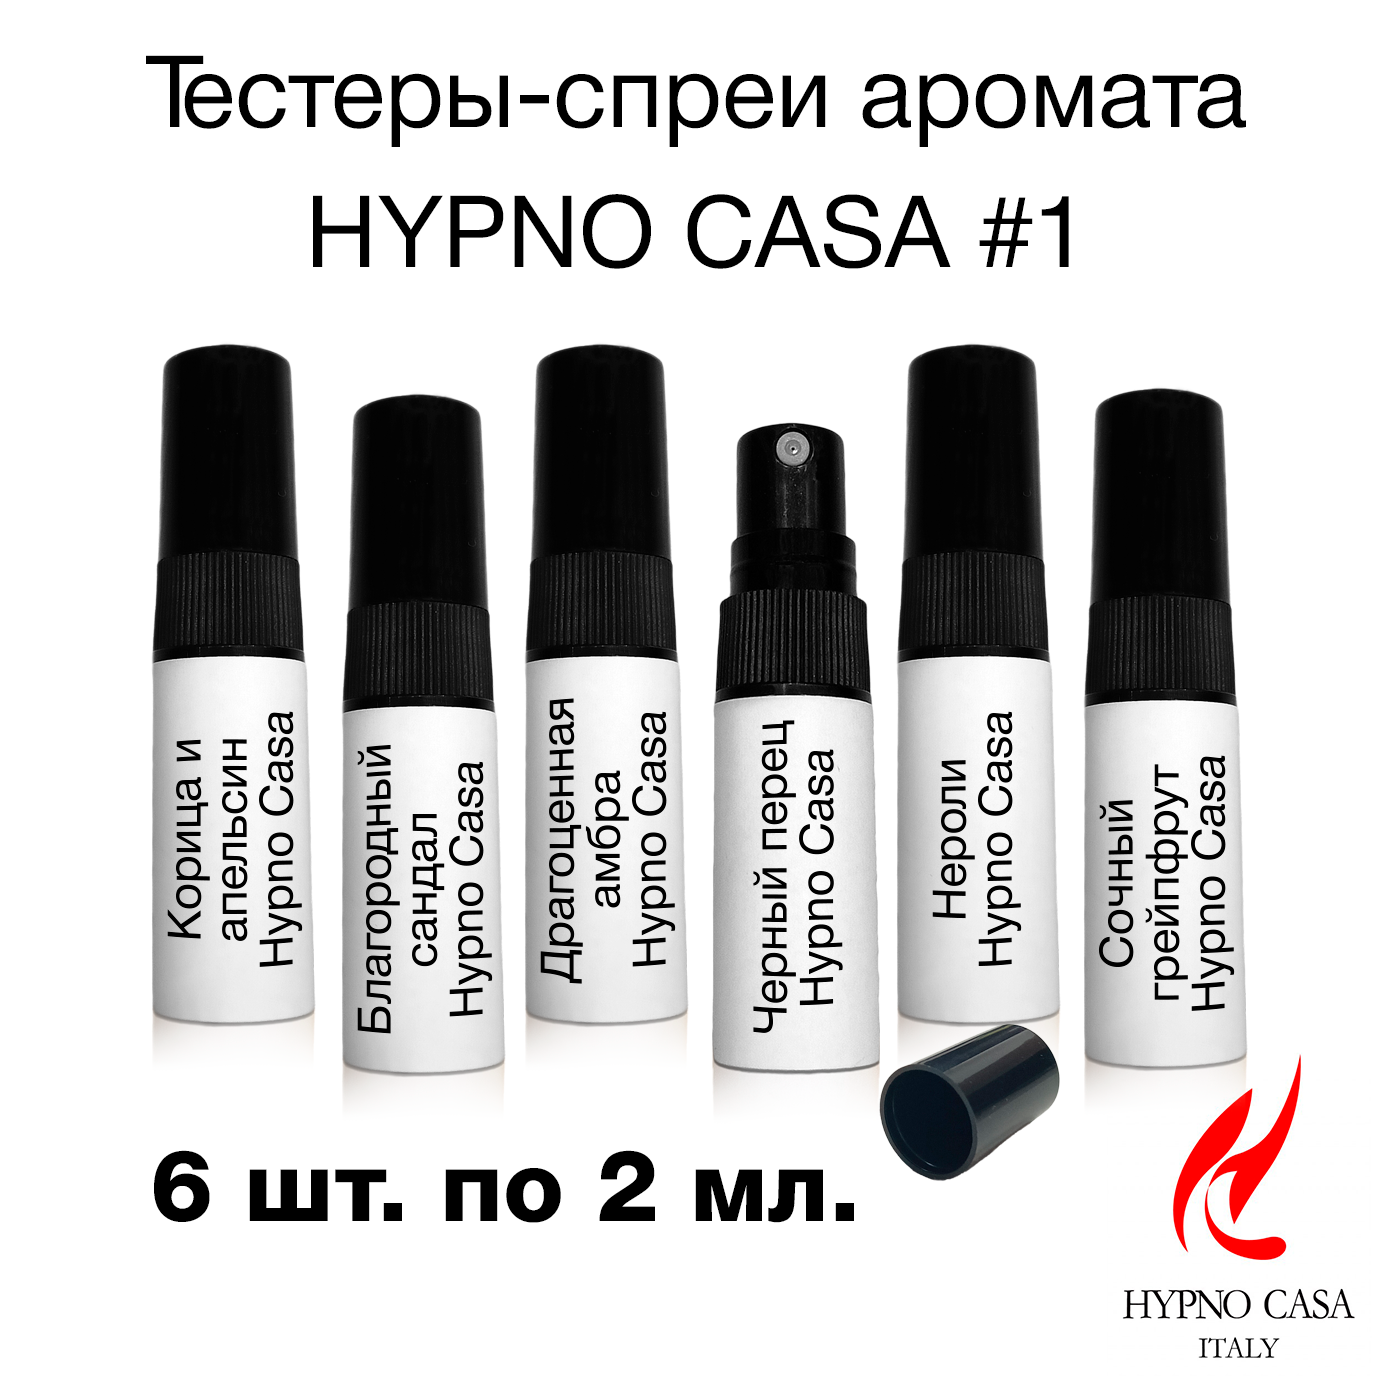 Hypno Casa #1, комплект тестеров, 6 шт х 2 мл